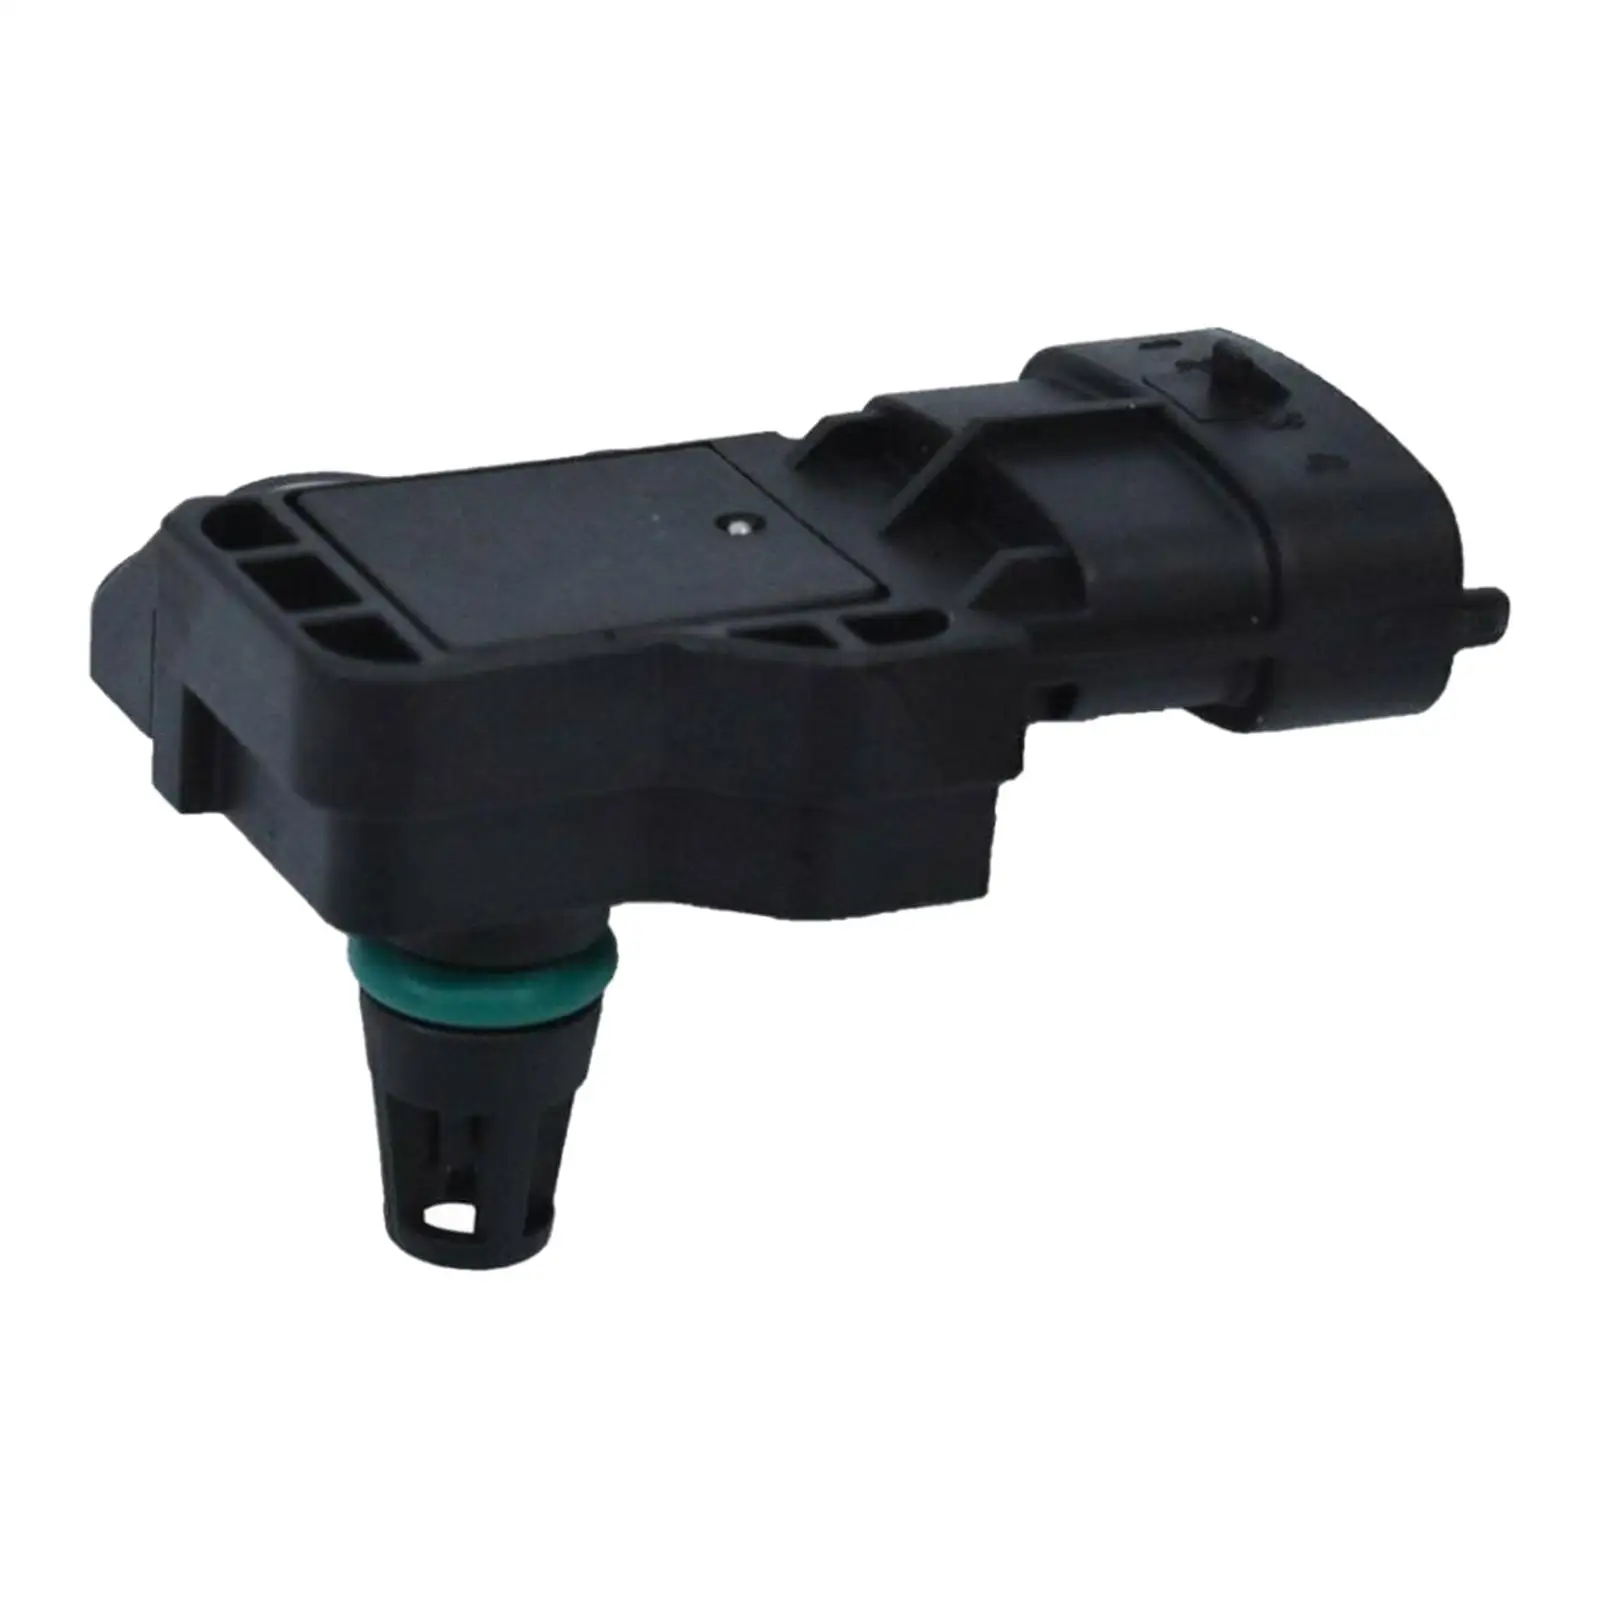 Direct Replacement   Flow Sensor for RZR 570 800 900 1000, Black